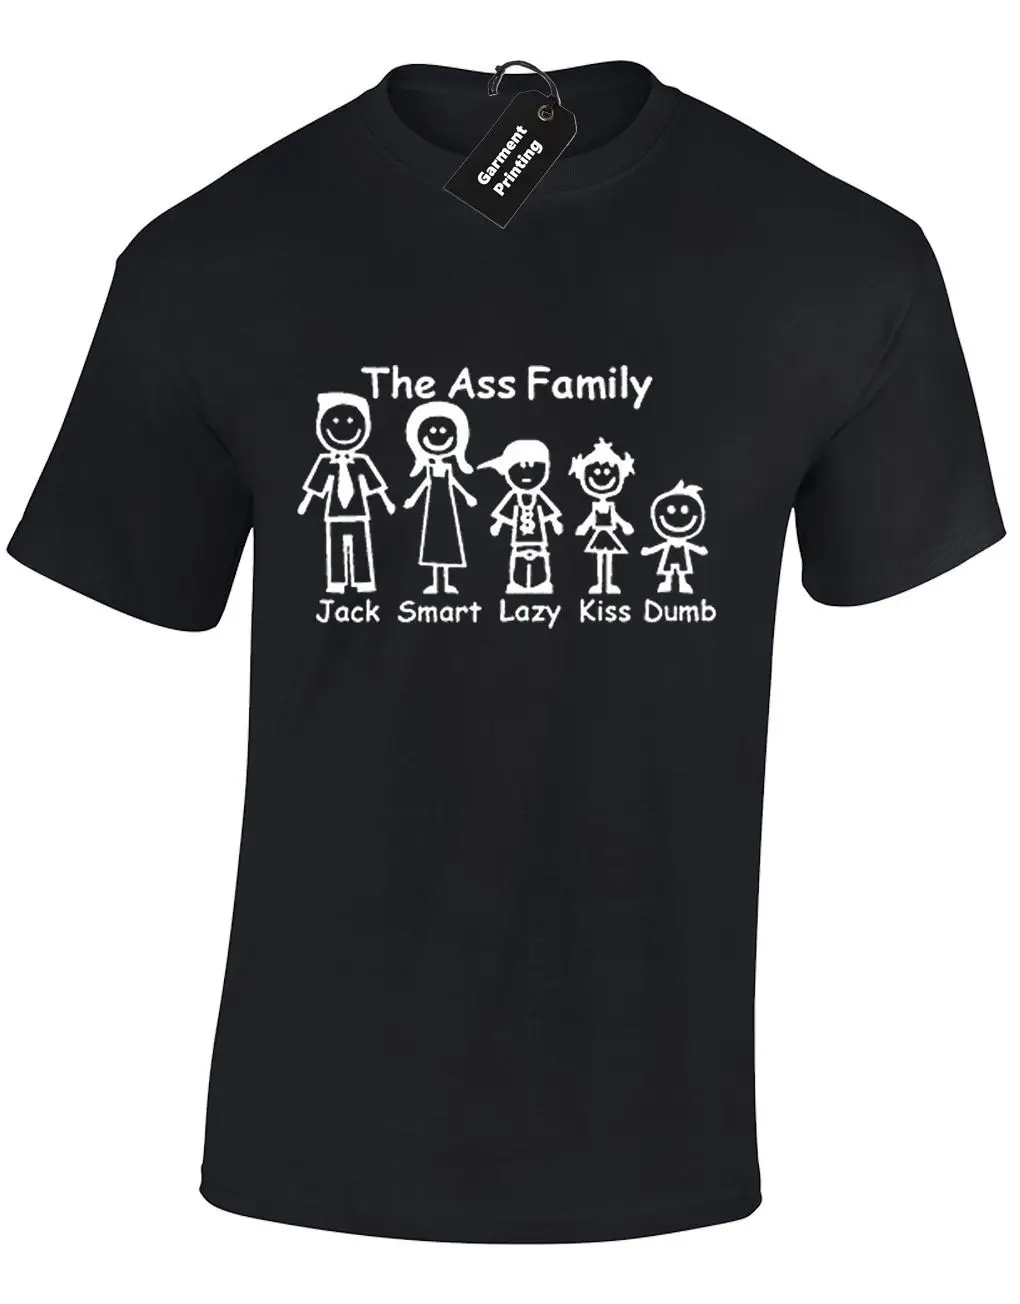 Семейная Мужская футболка с надписью THE ASS забавная новая качественная